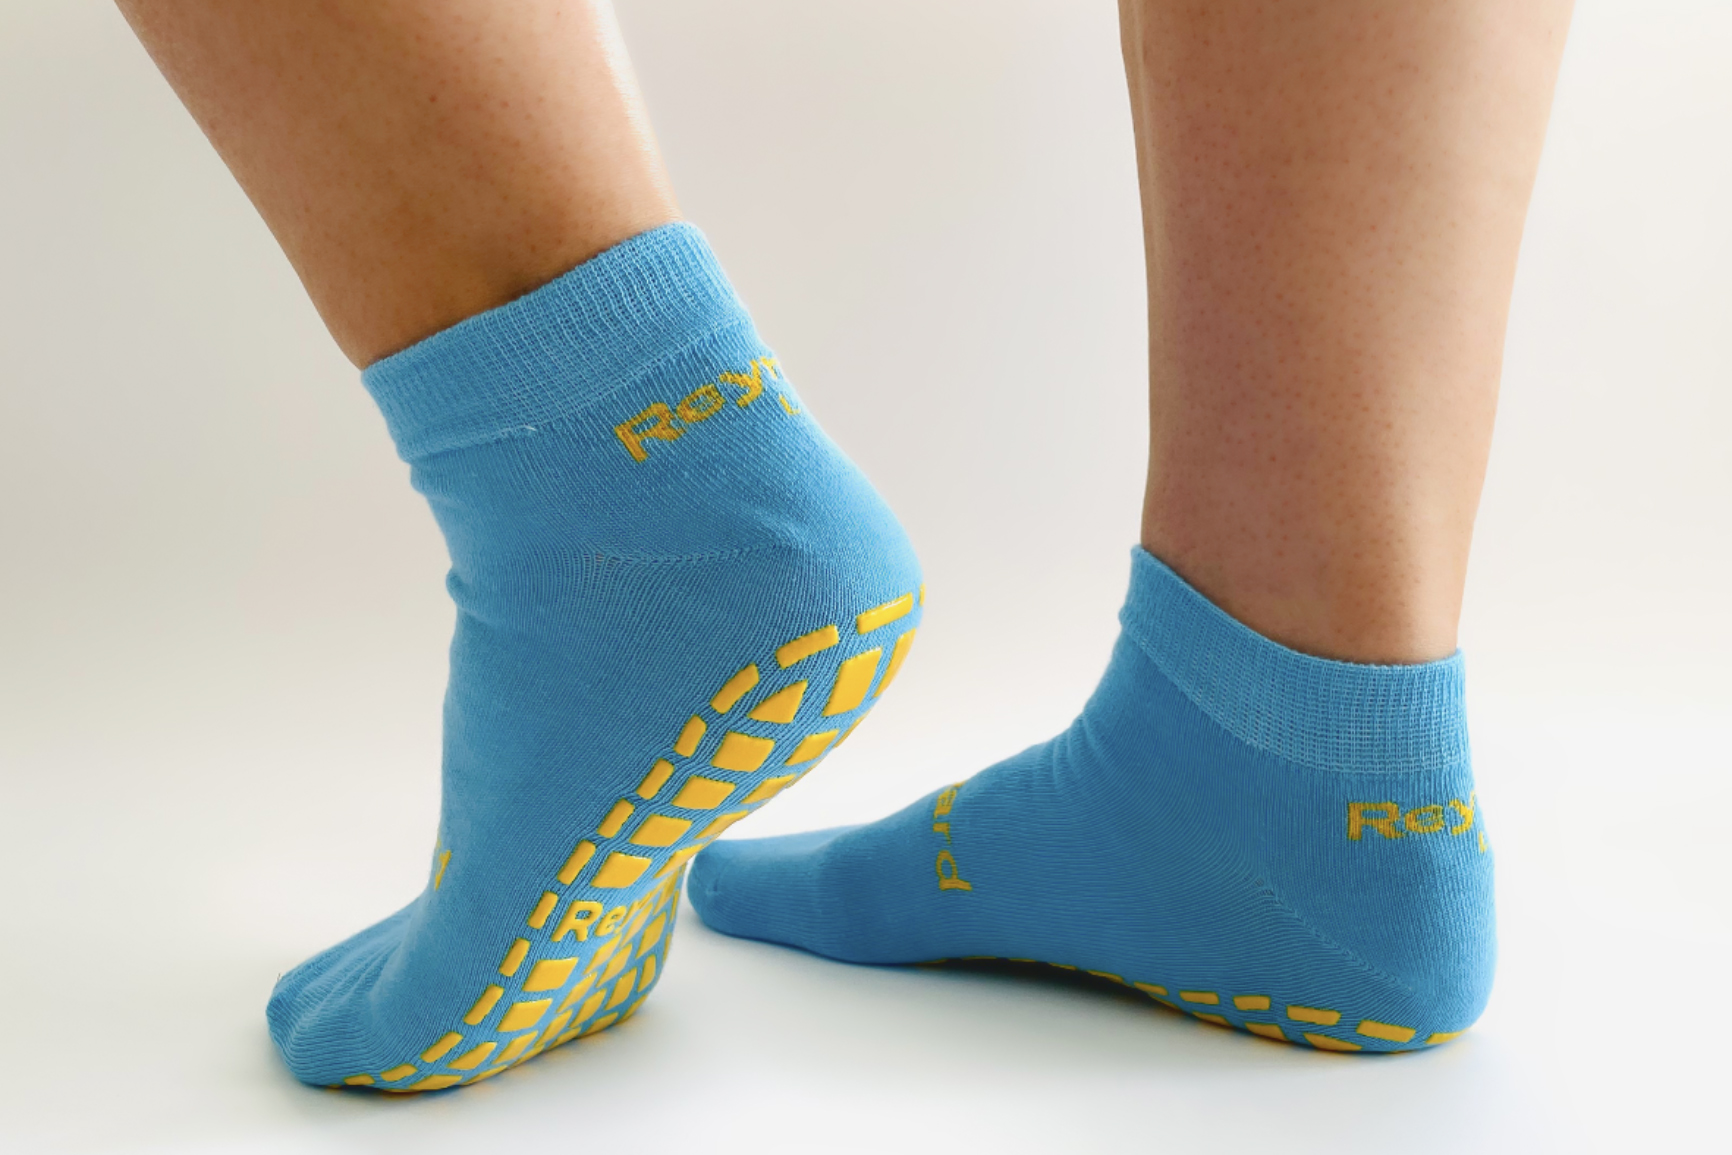 jiu jitsu Socks for Sale by LazyHatter